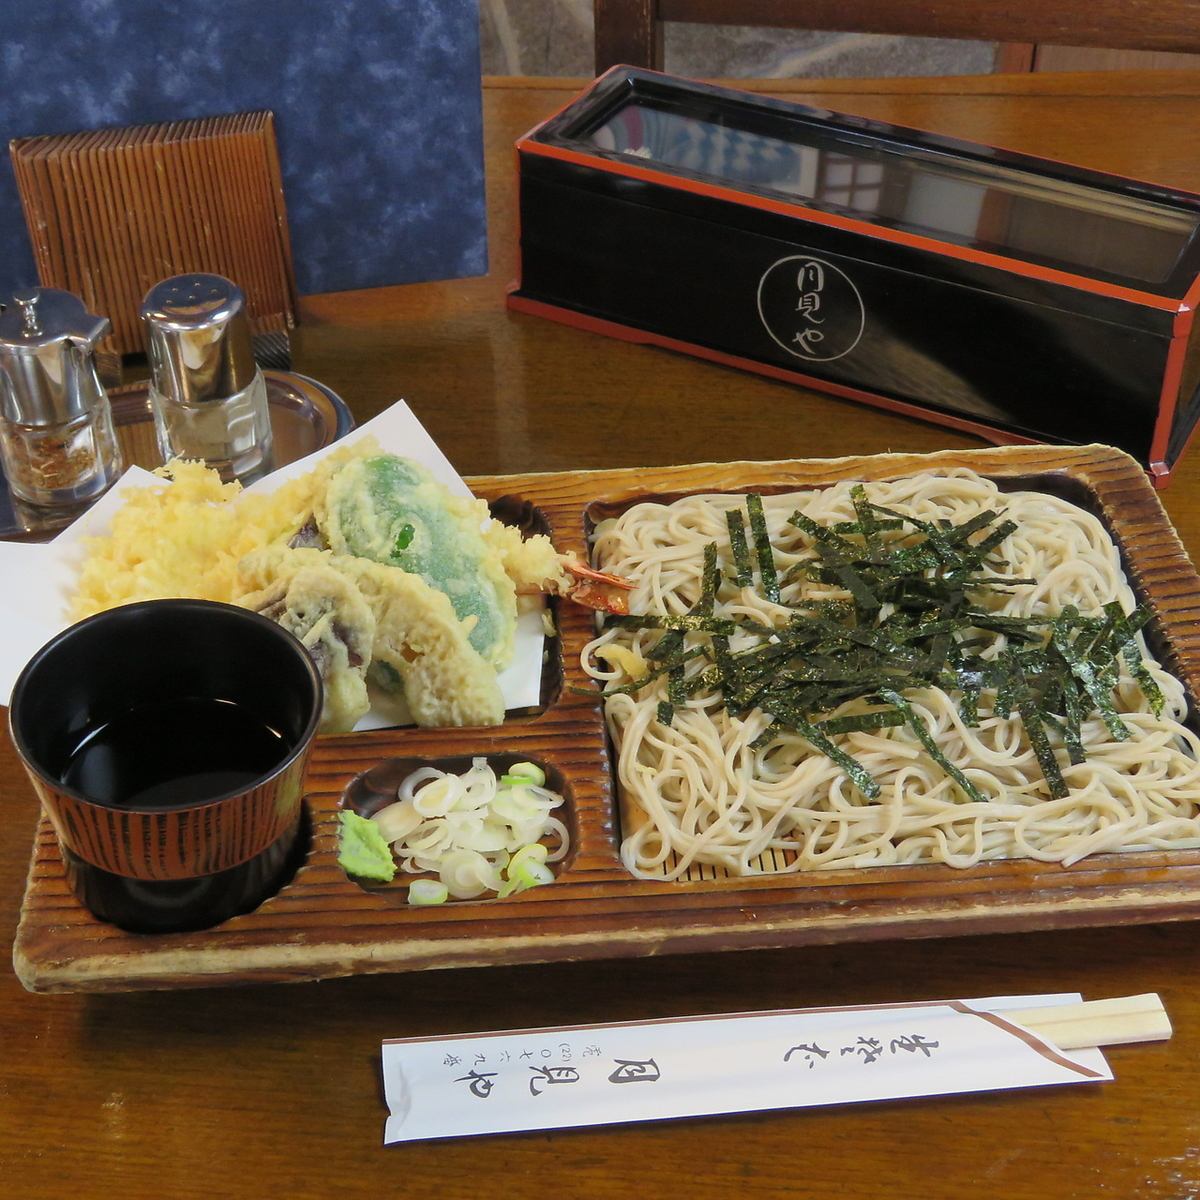 The big prawn tempura is the centerpiece of "Tsukimiya"